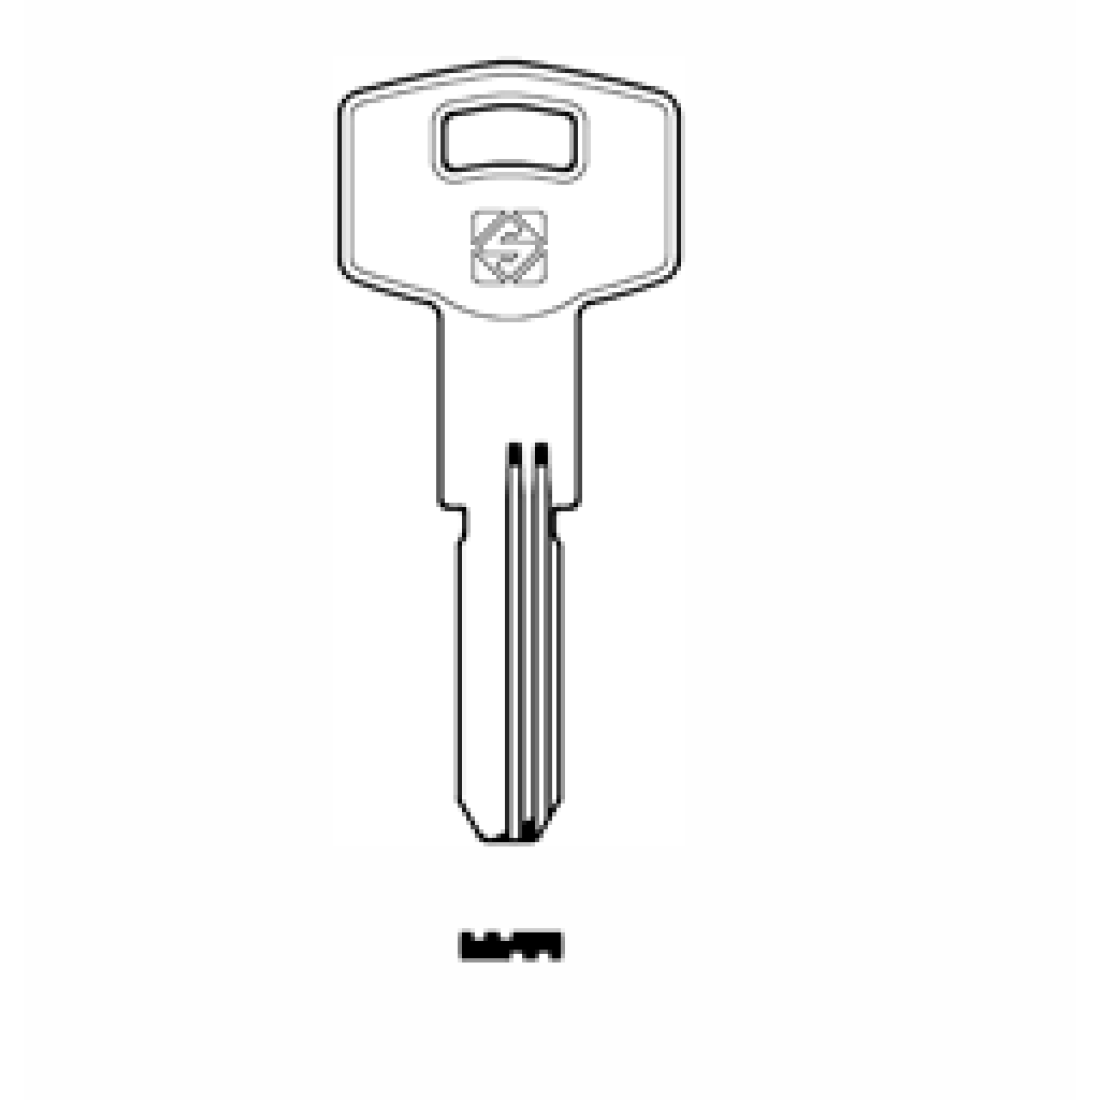 Заготовки ключей Silca fi3r. Заготовка ключа kae10d аналоги. Заготовка ключа Schuco-t35. Ключи Silca kle. Profile key